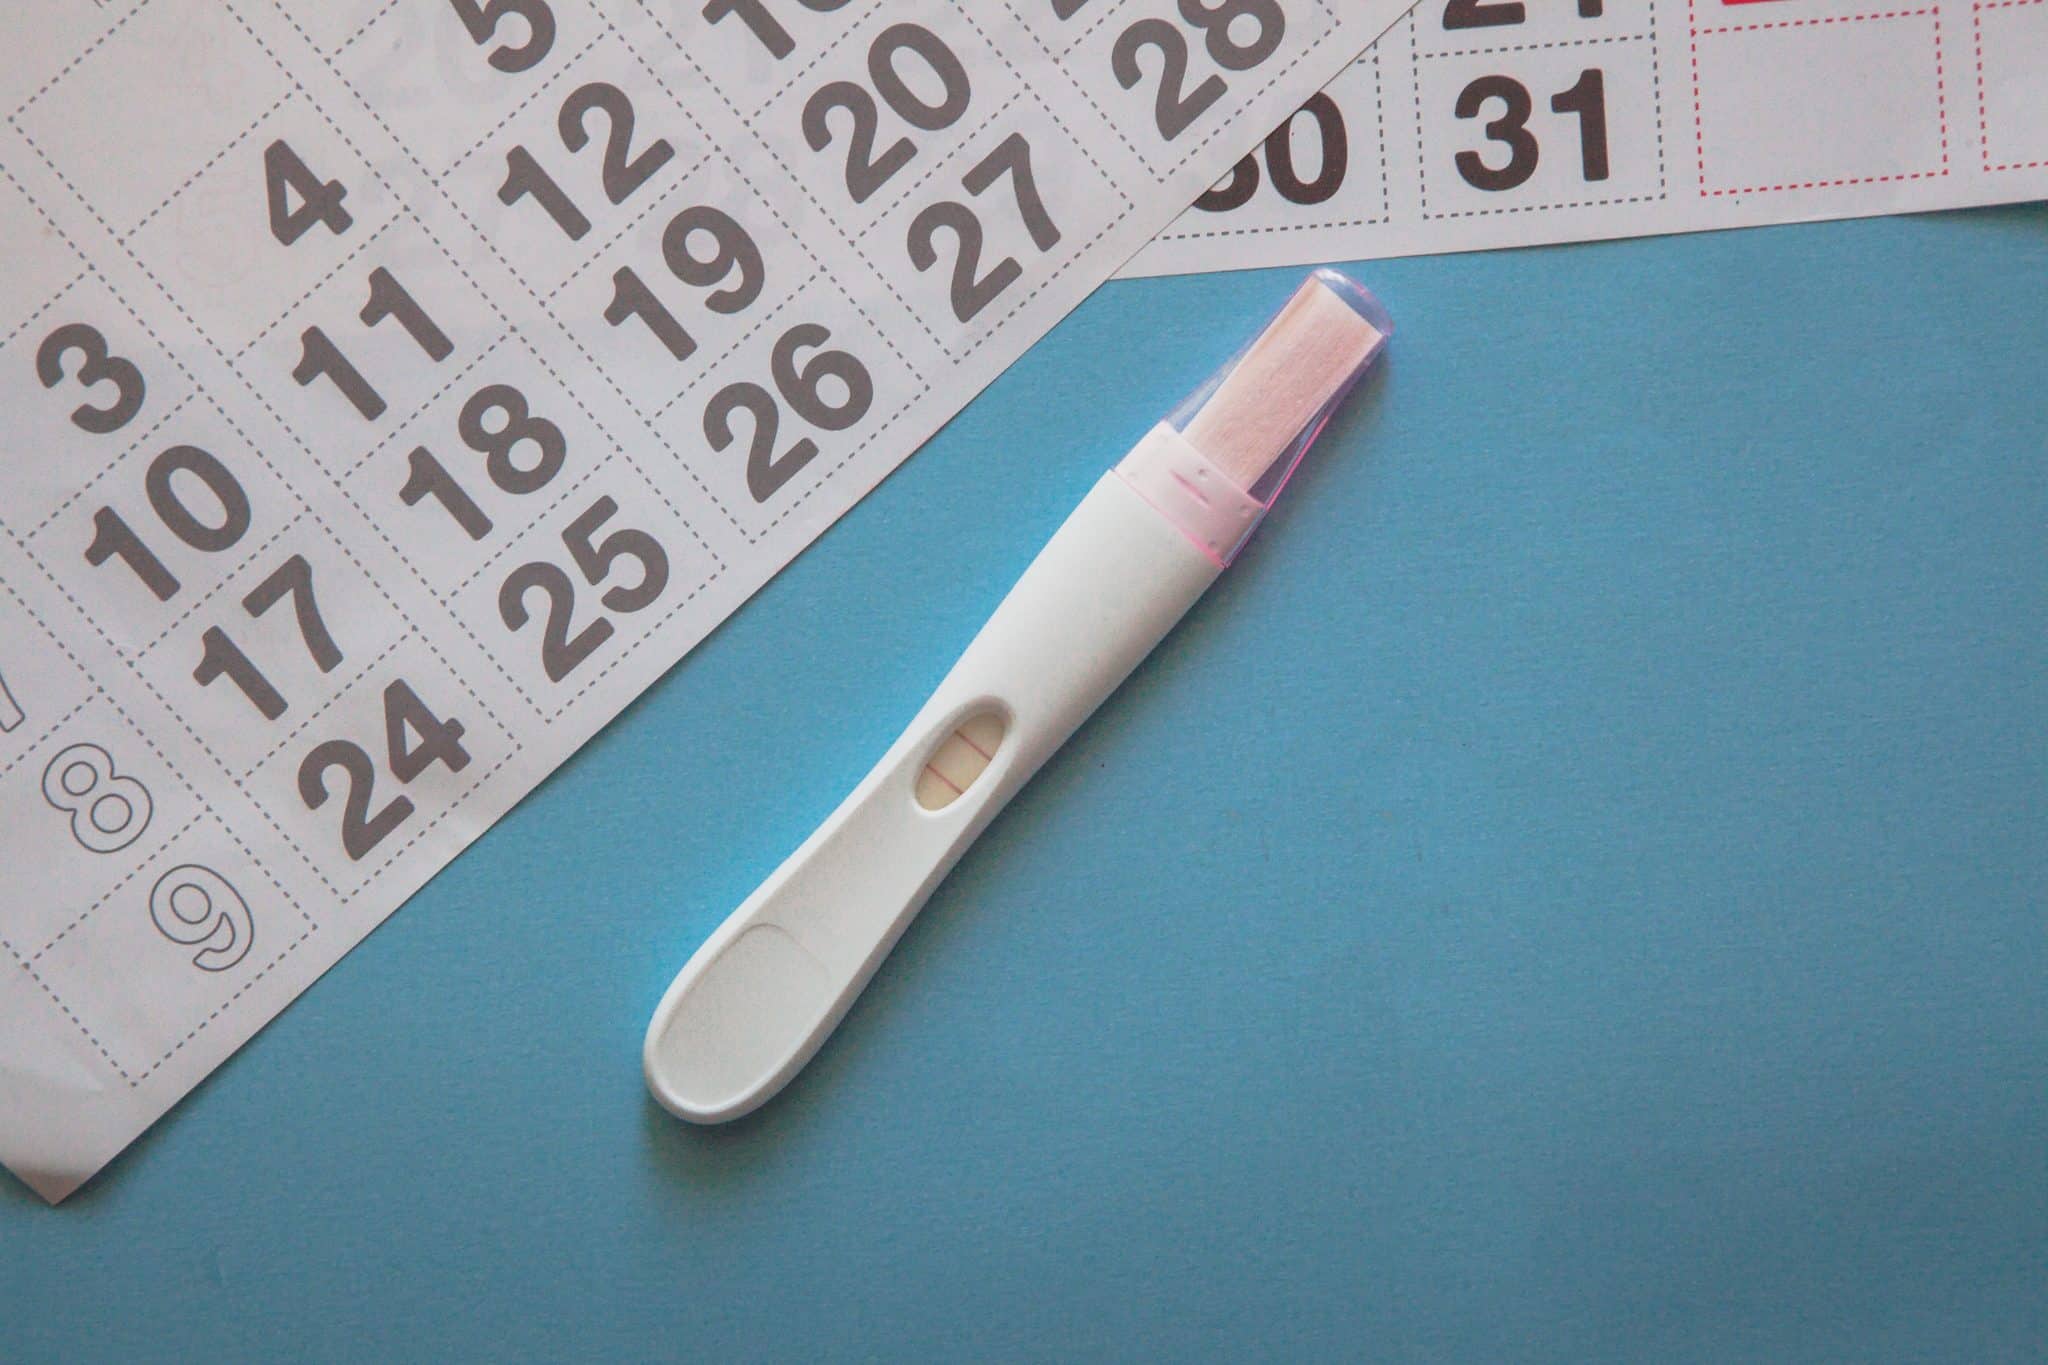 Test de grossesse : comment l’utiliser ?